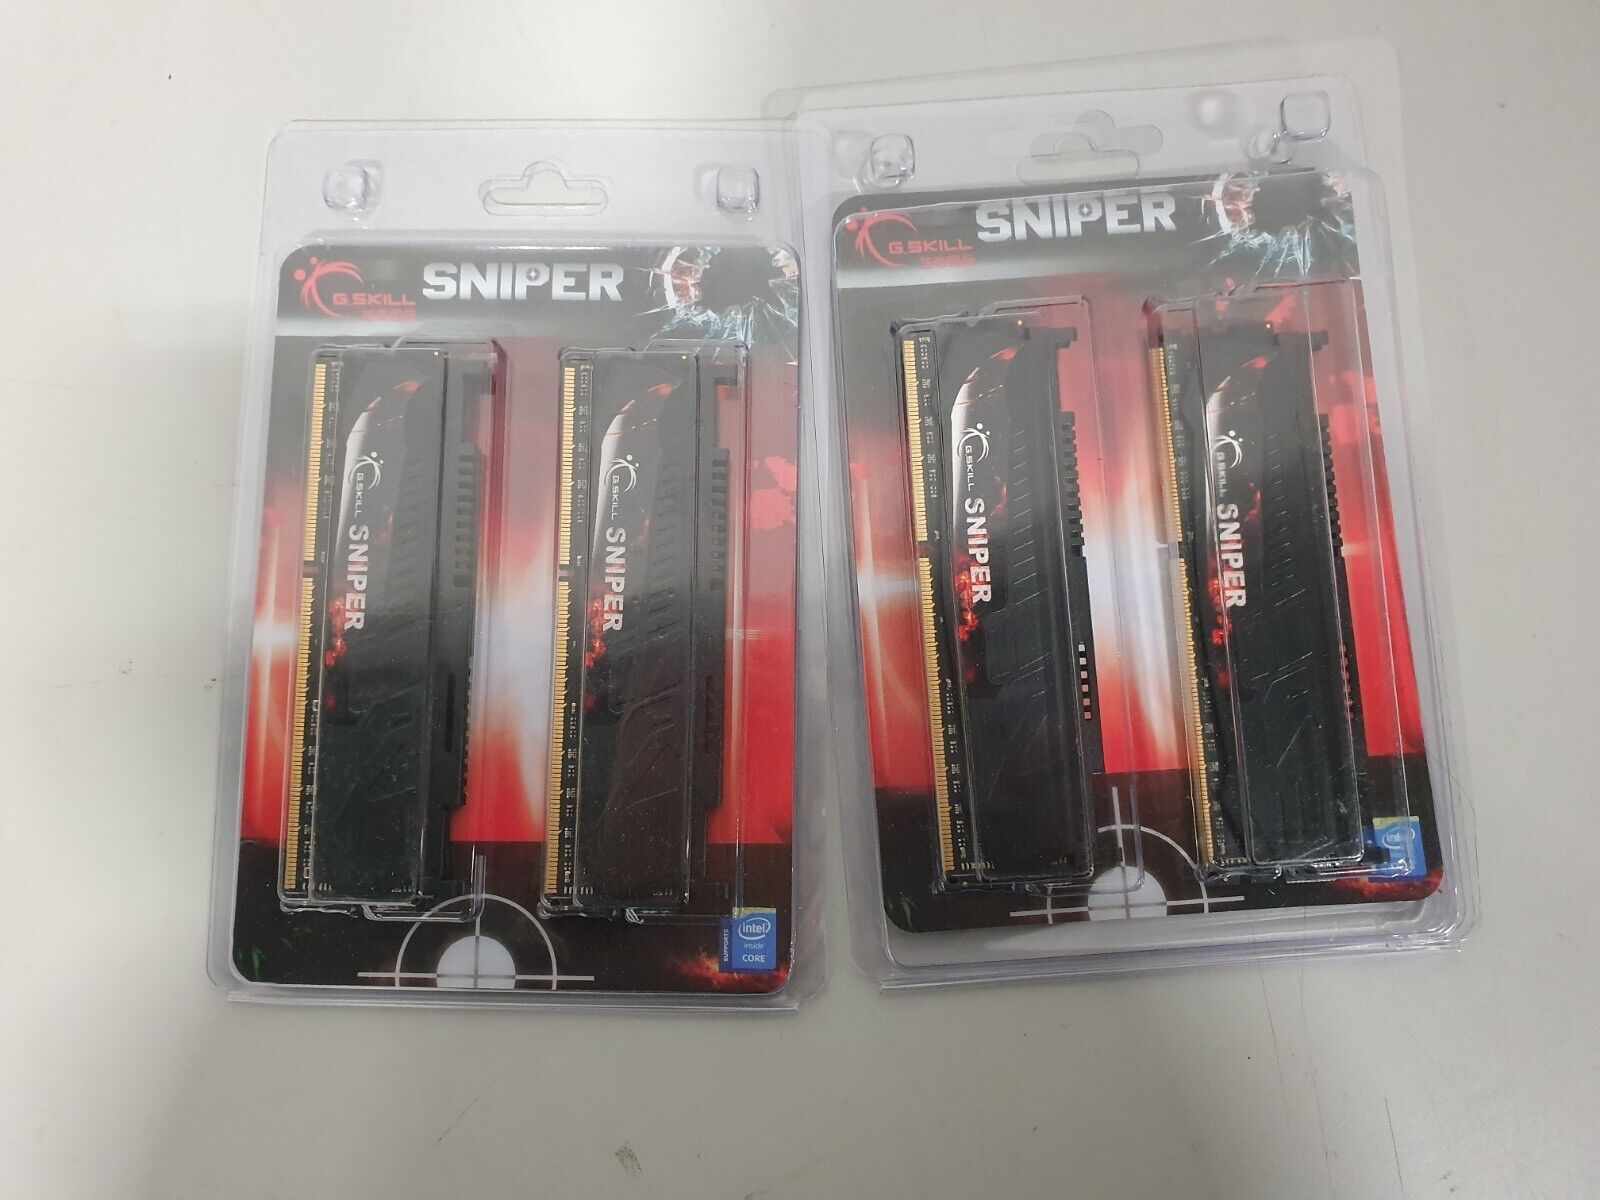 32GB G.Skill DDR3 PC3-17000 2133MHz Sniper SeriDDR 8gx4